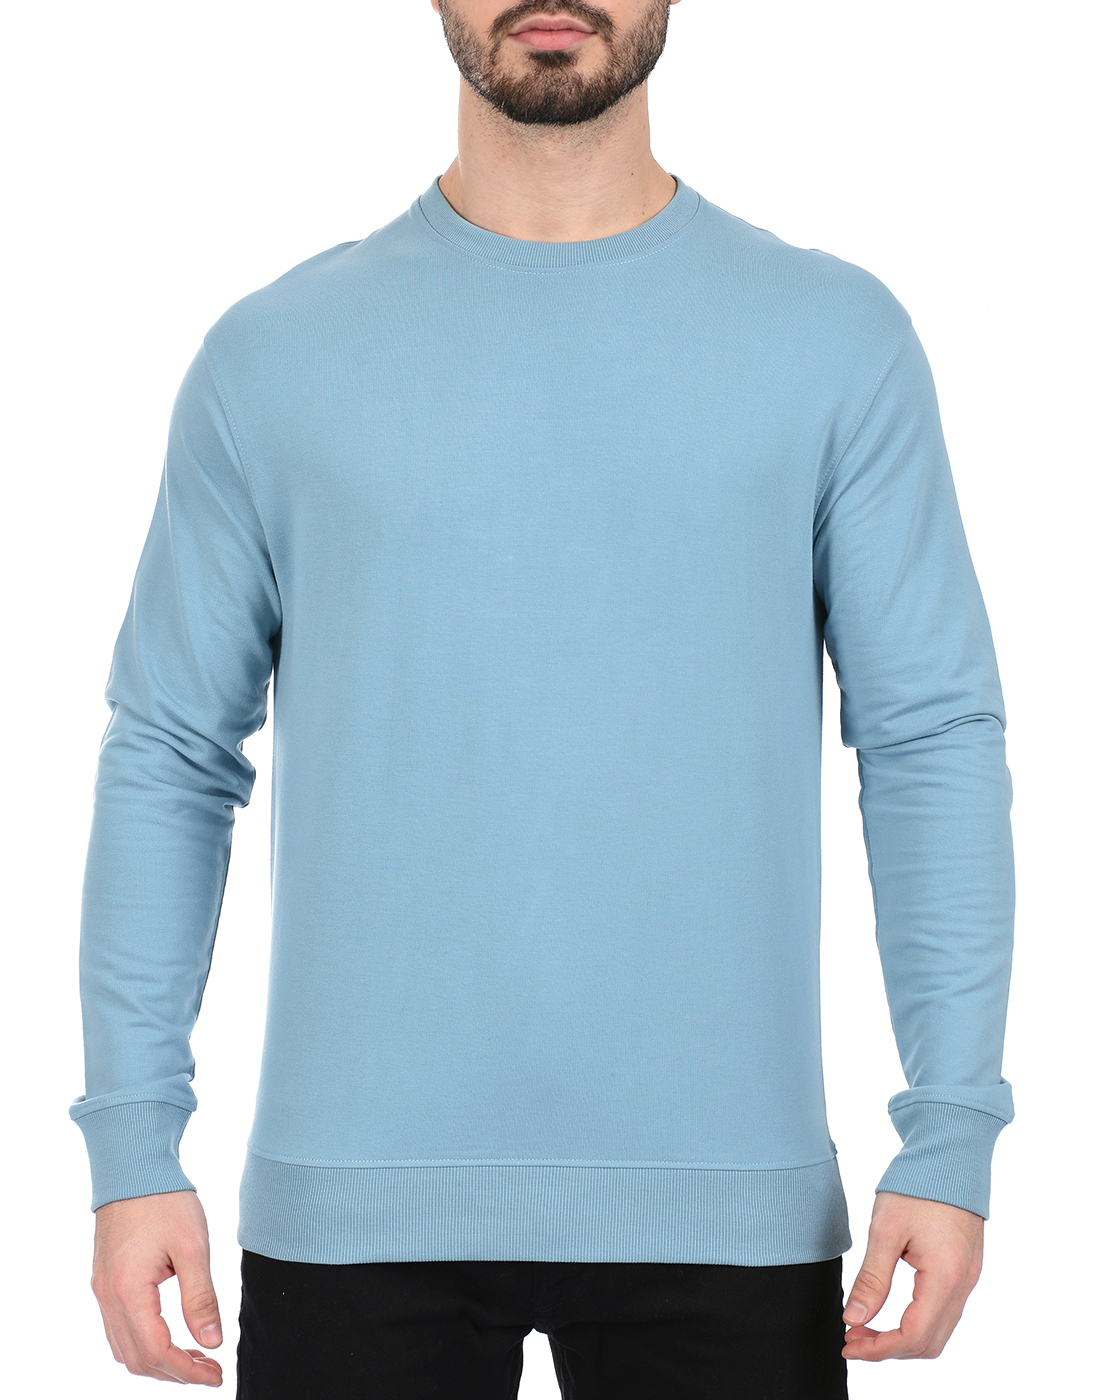 Oneway Men Solid Blue Sweatshirt